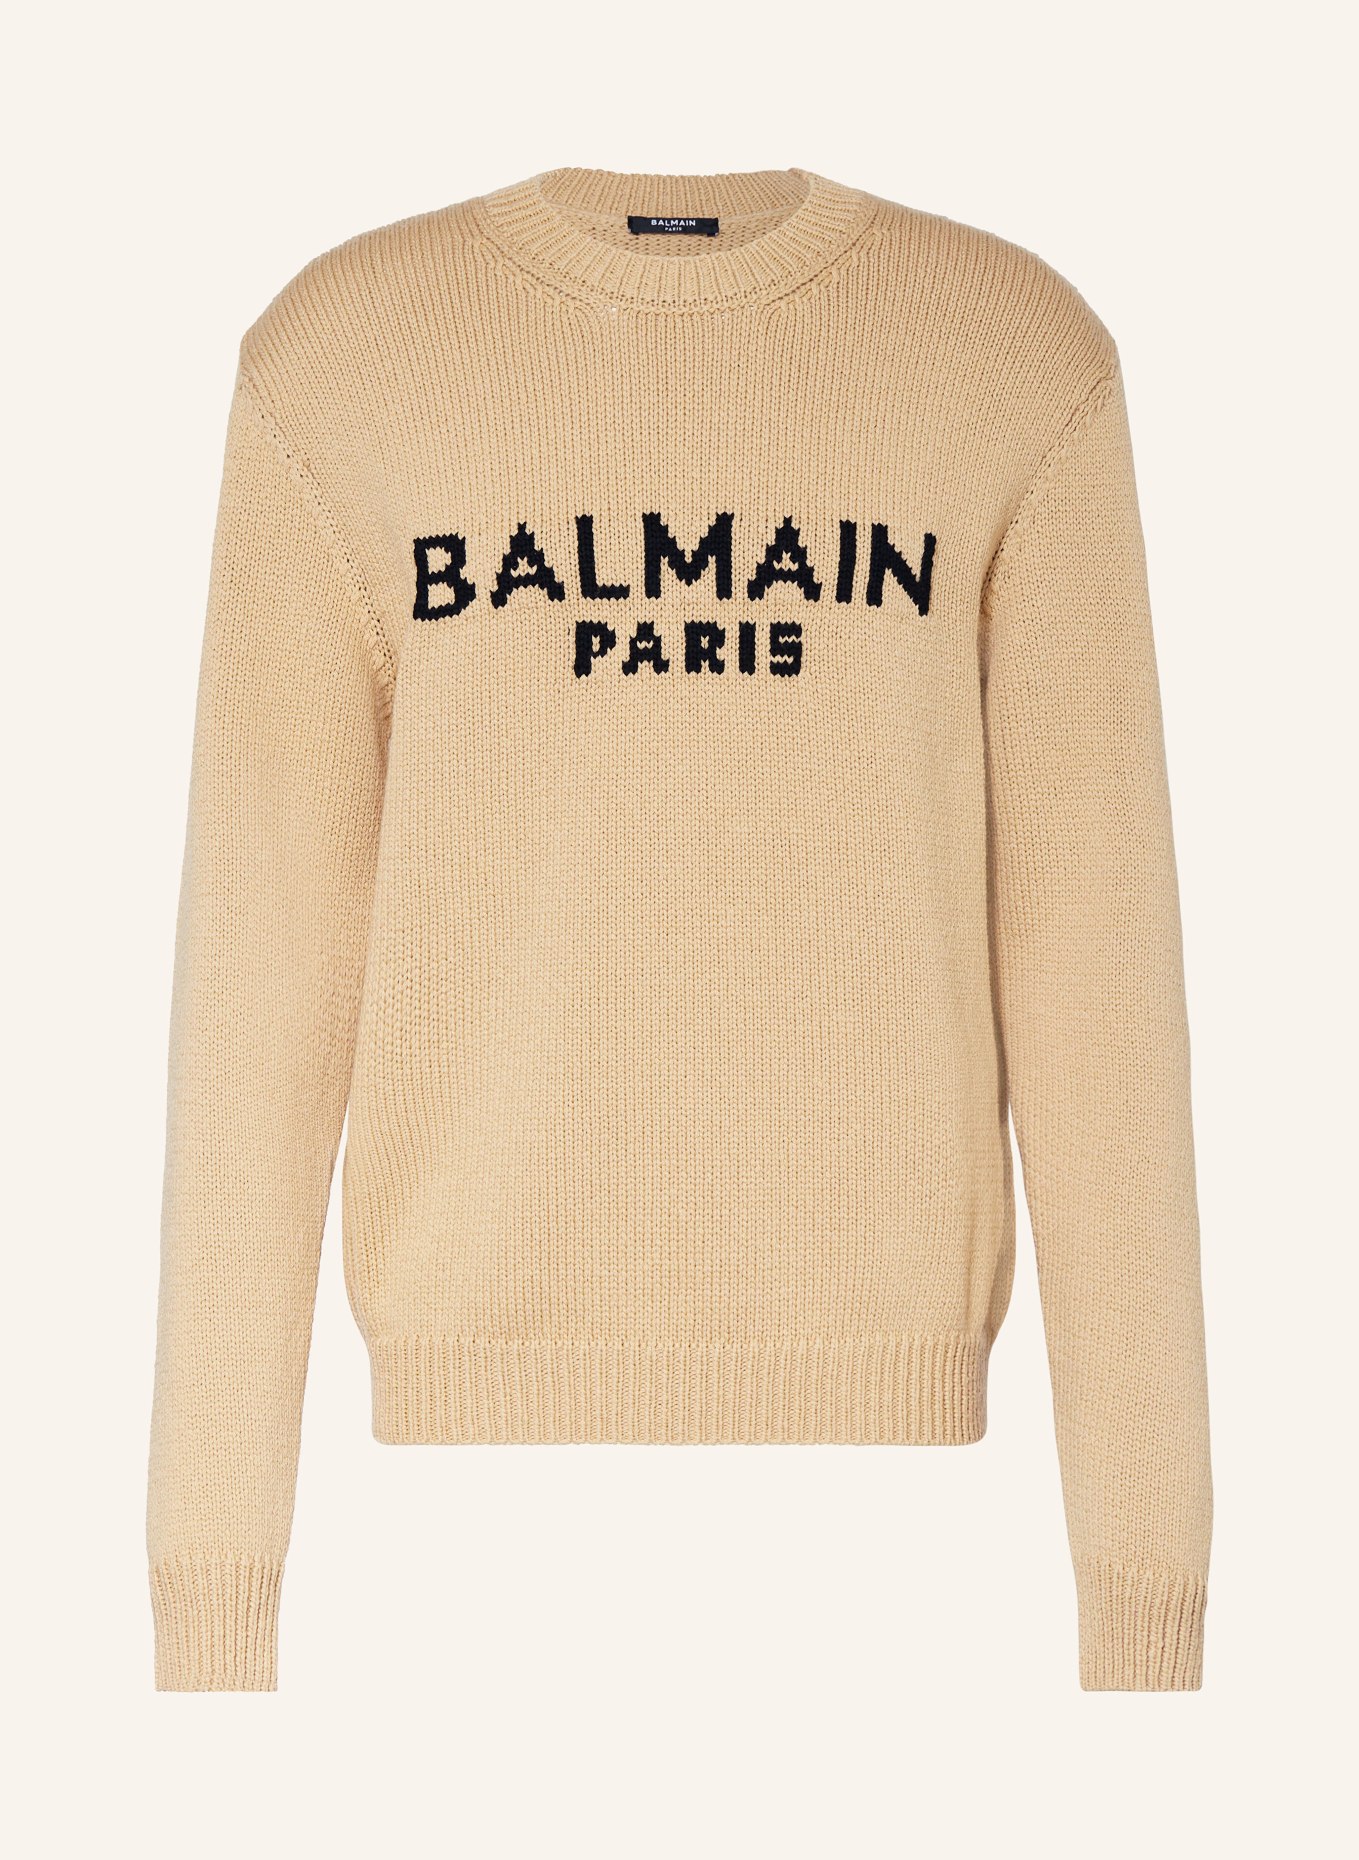 BALMAIN Pullover, Farbe: BEIGE/ SCHWARZ (Bild 1)